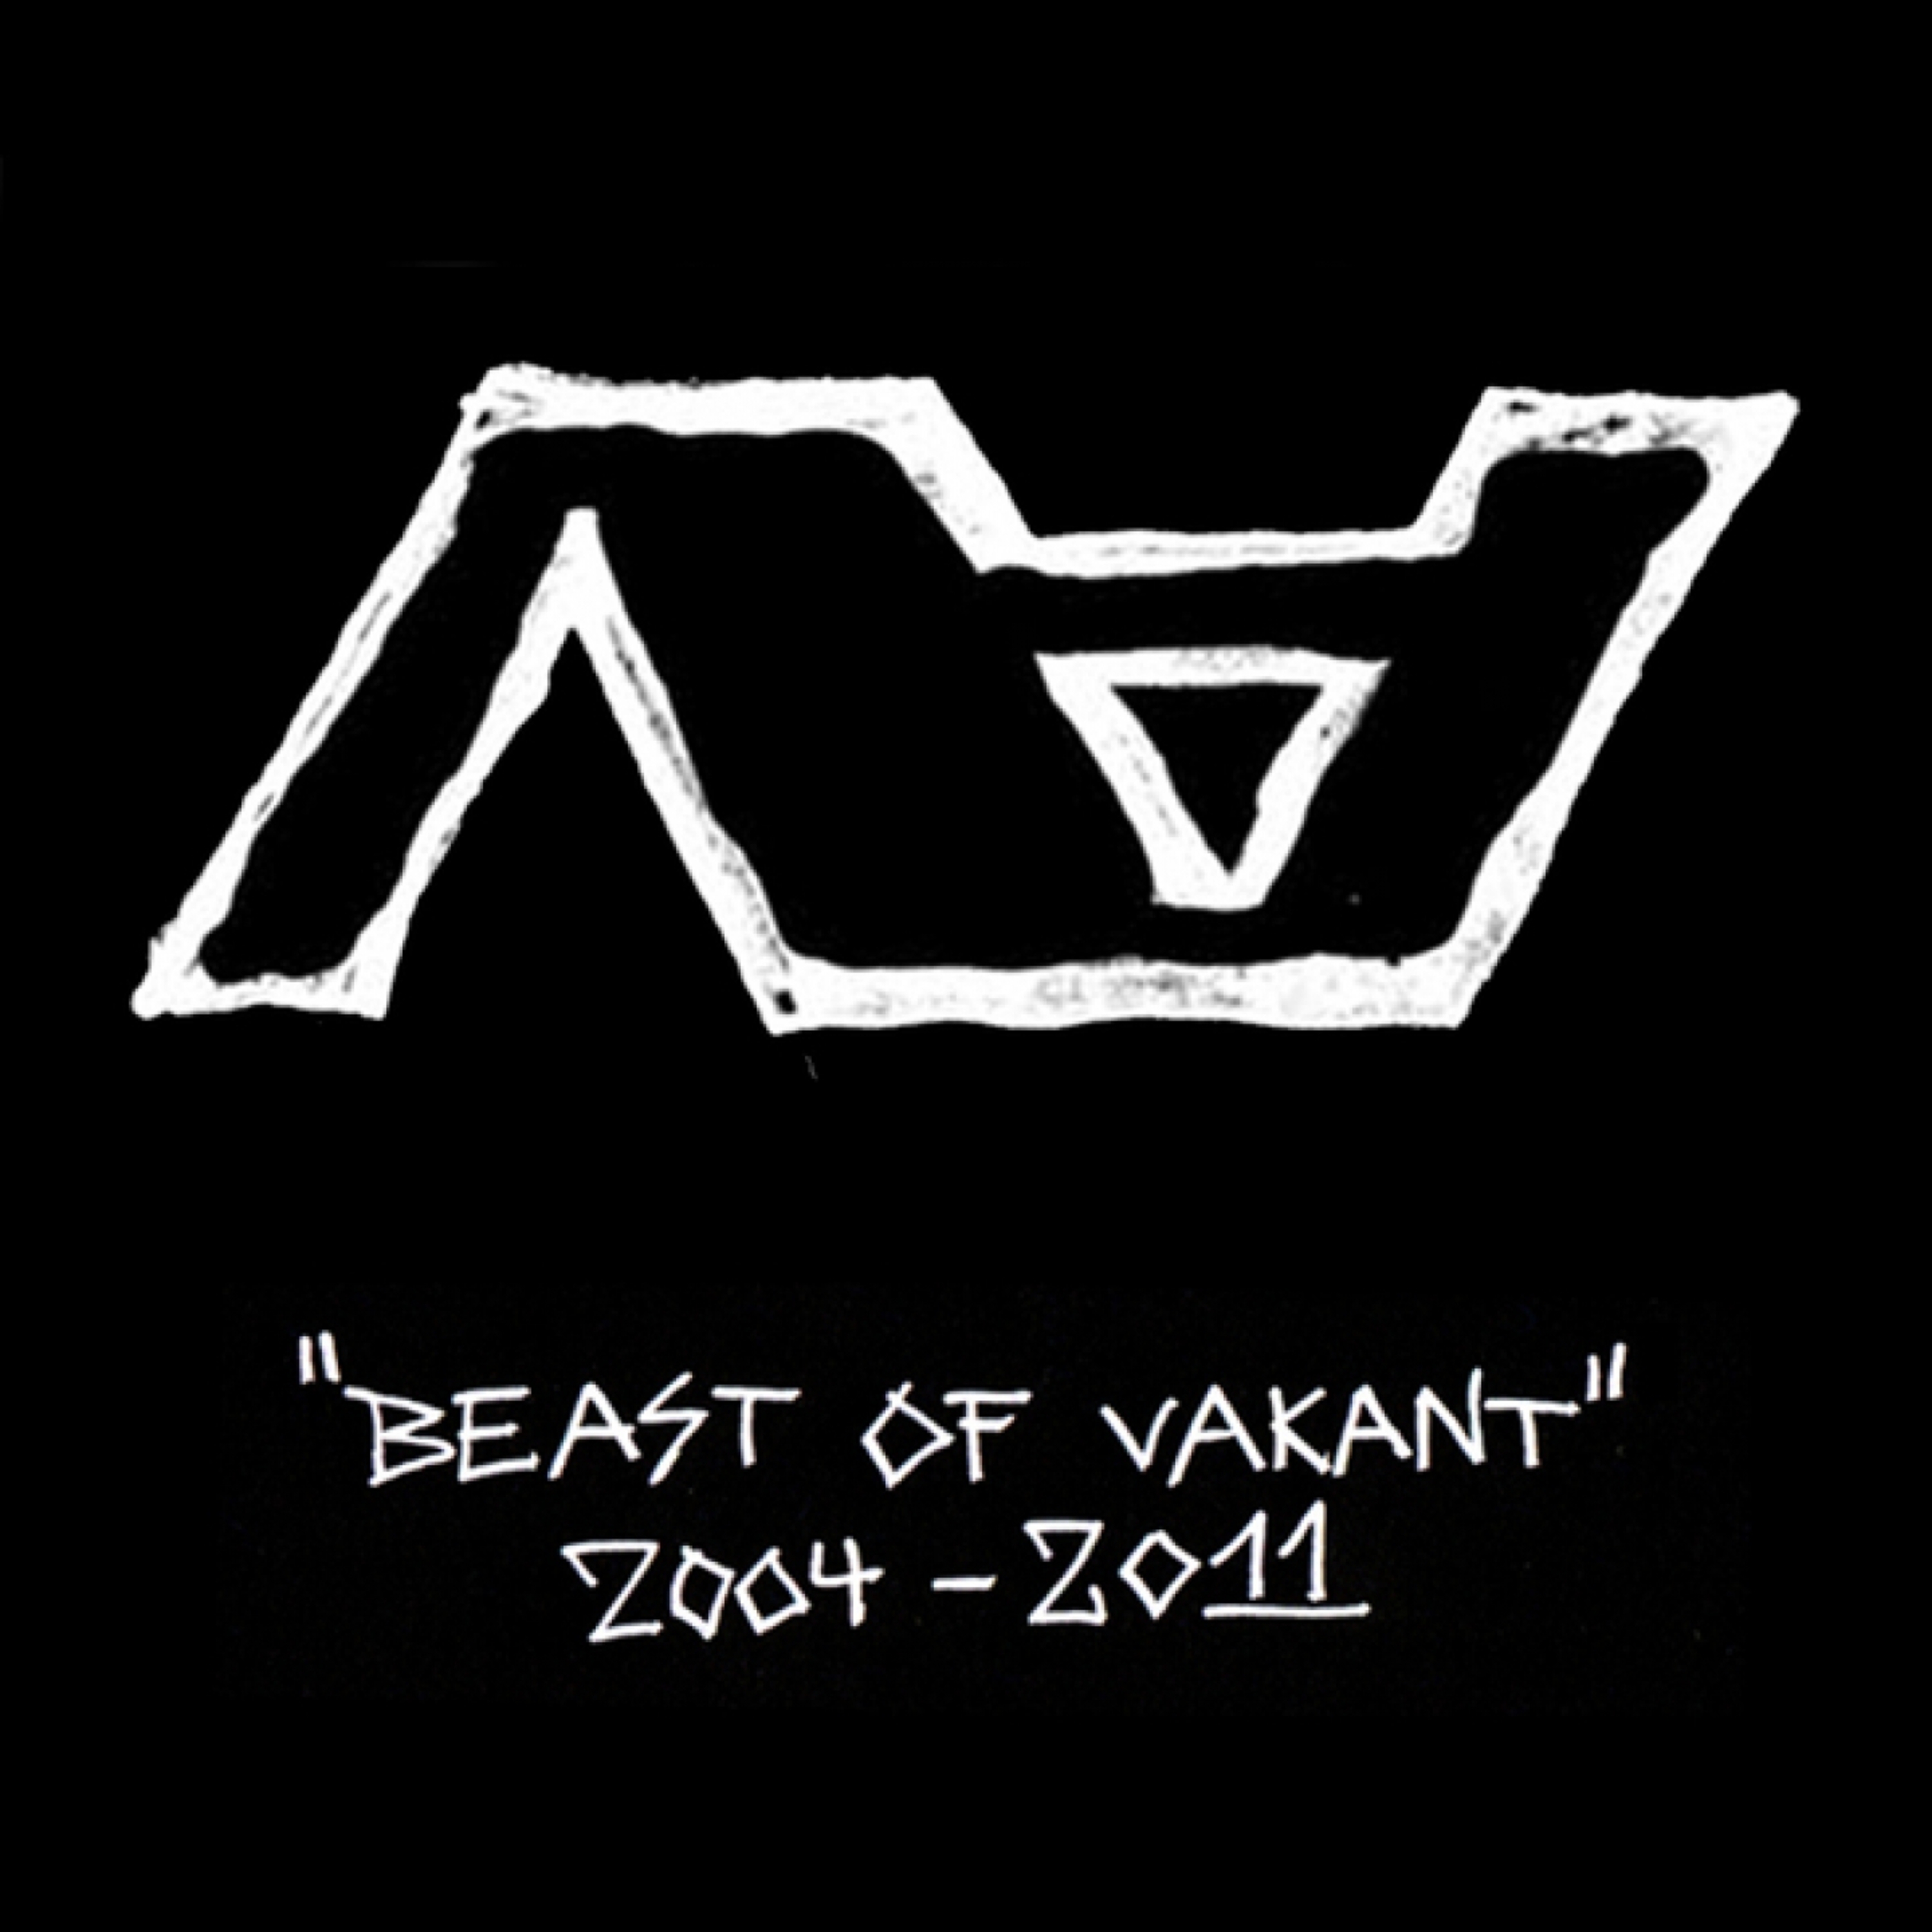 Beast of Vakant 2004-2011